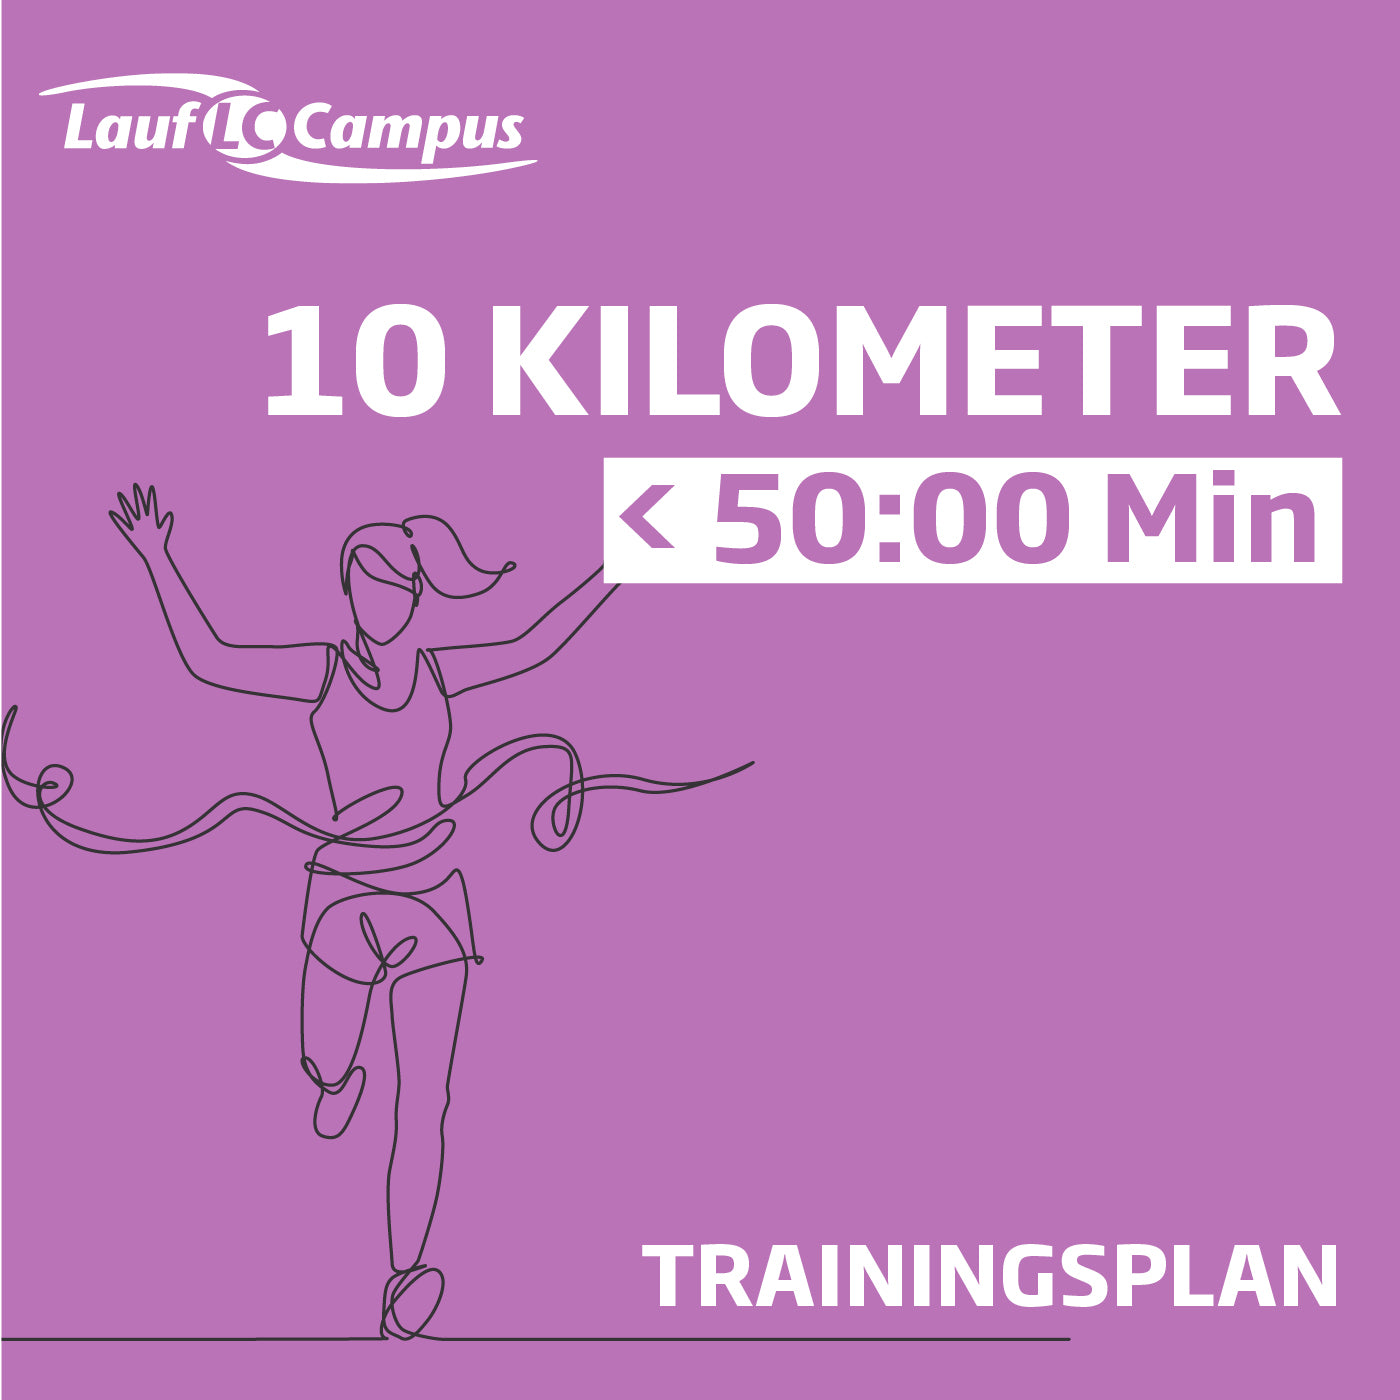 Trainingsplan 10 km unter 50 Minuten